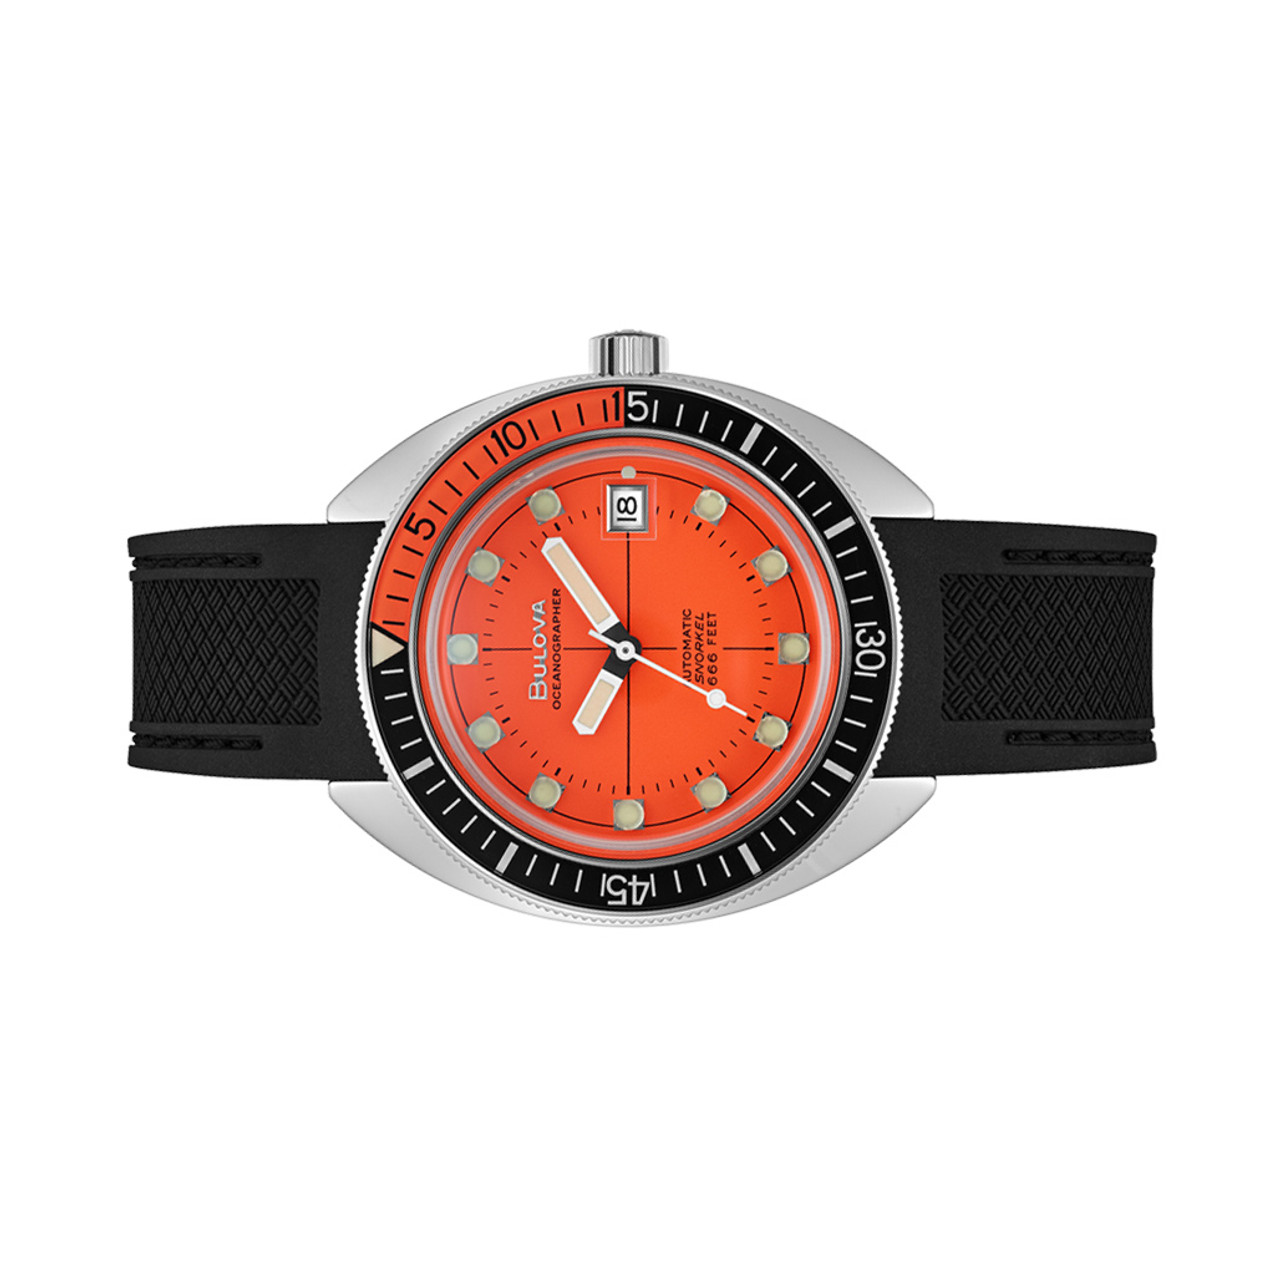 Bulova Oceanographer with Dial Orange Snorkel #96B350 Automatic Watch Dive